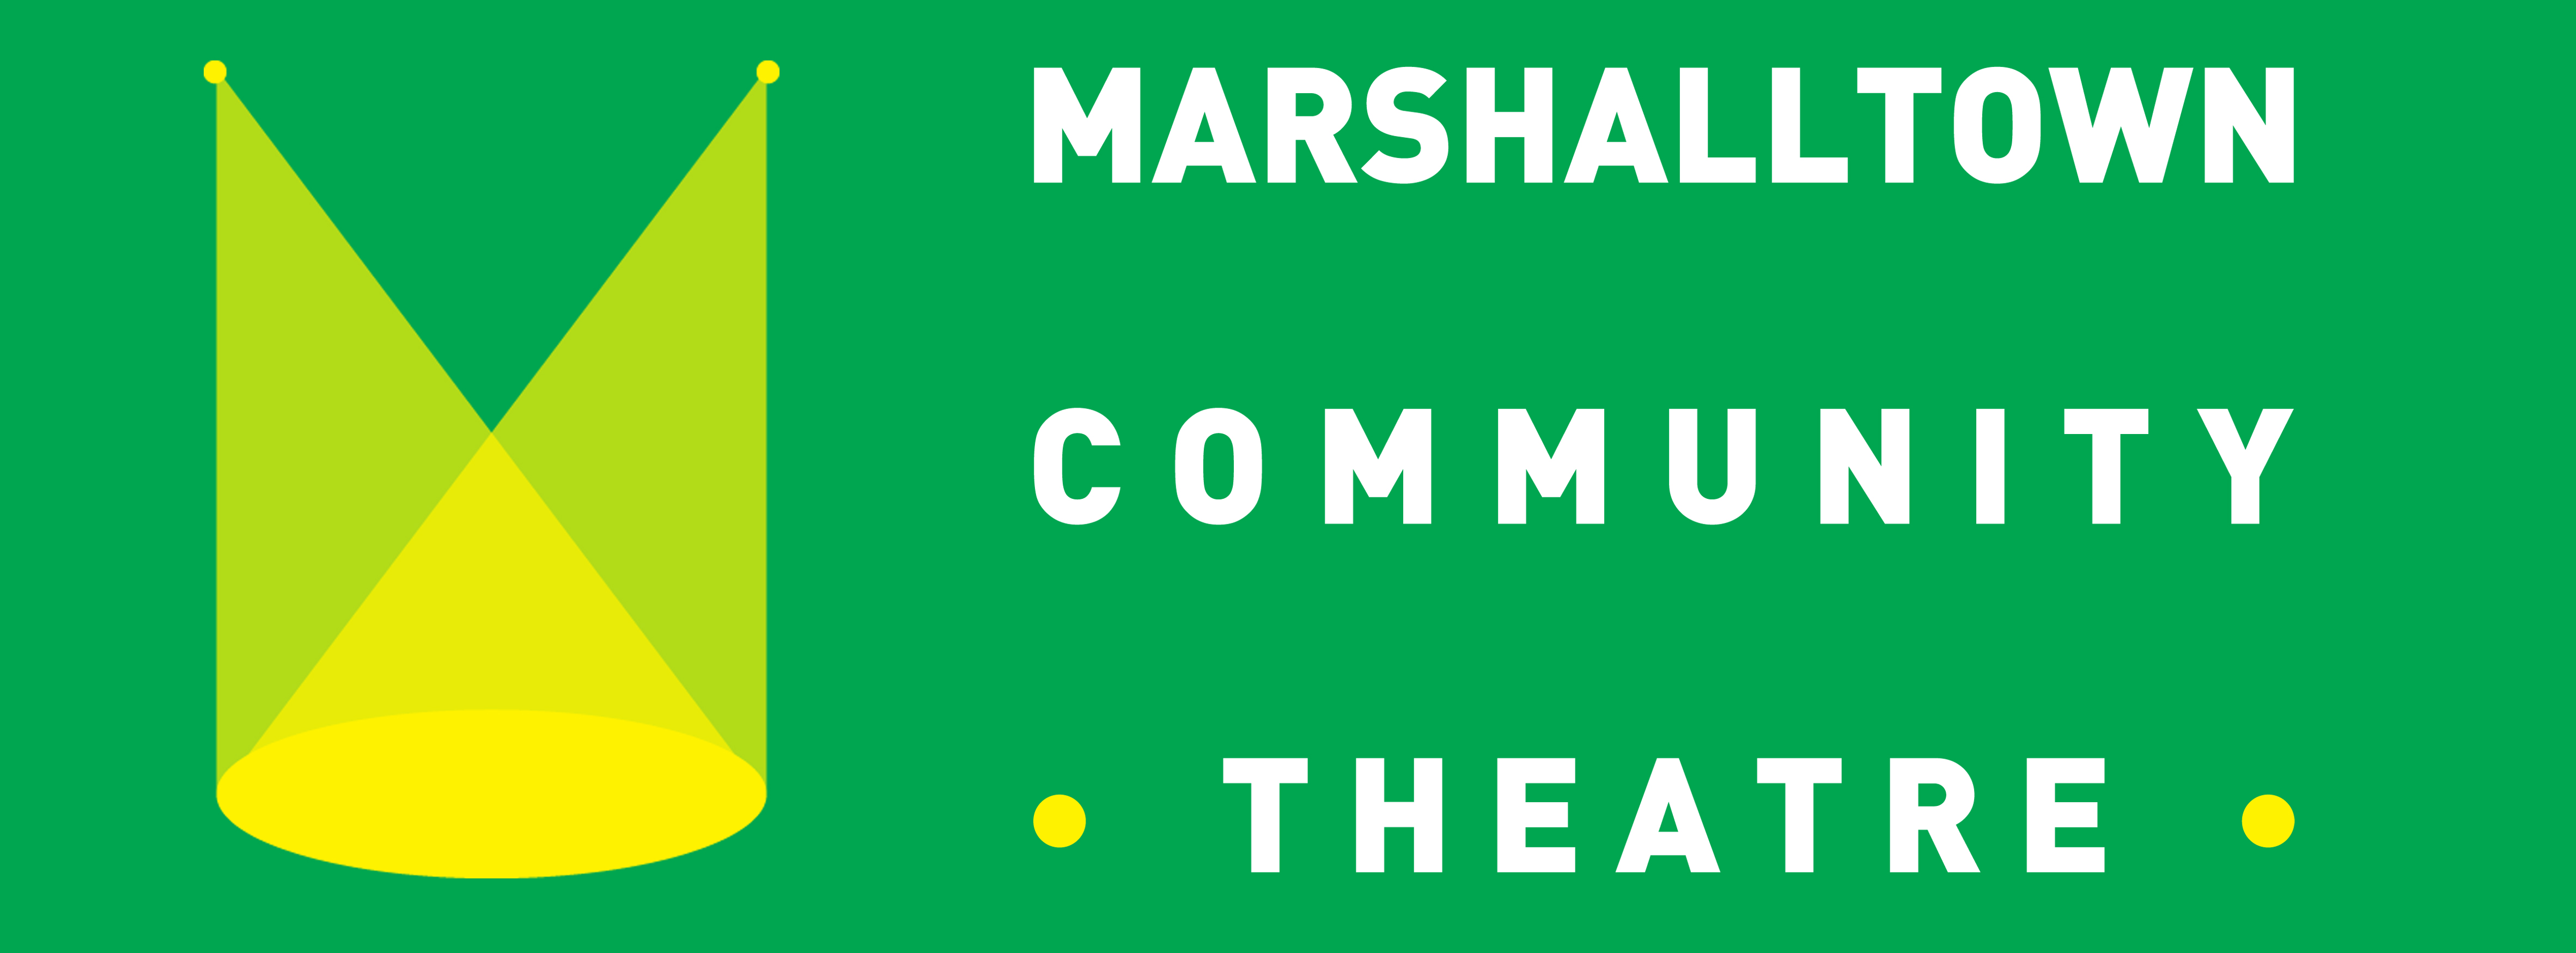 Marshalltown Community Theatre logo